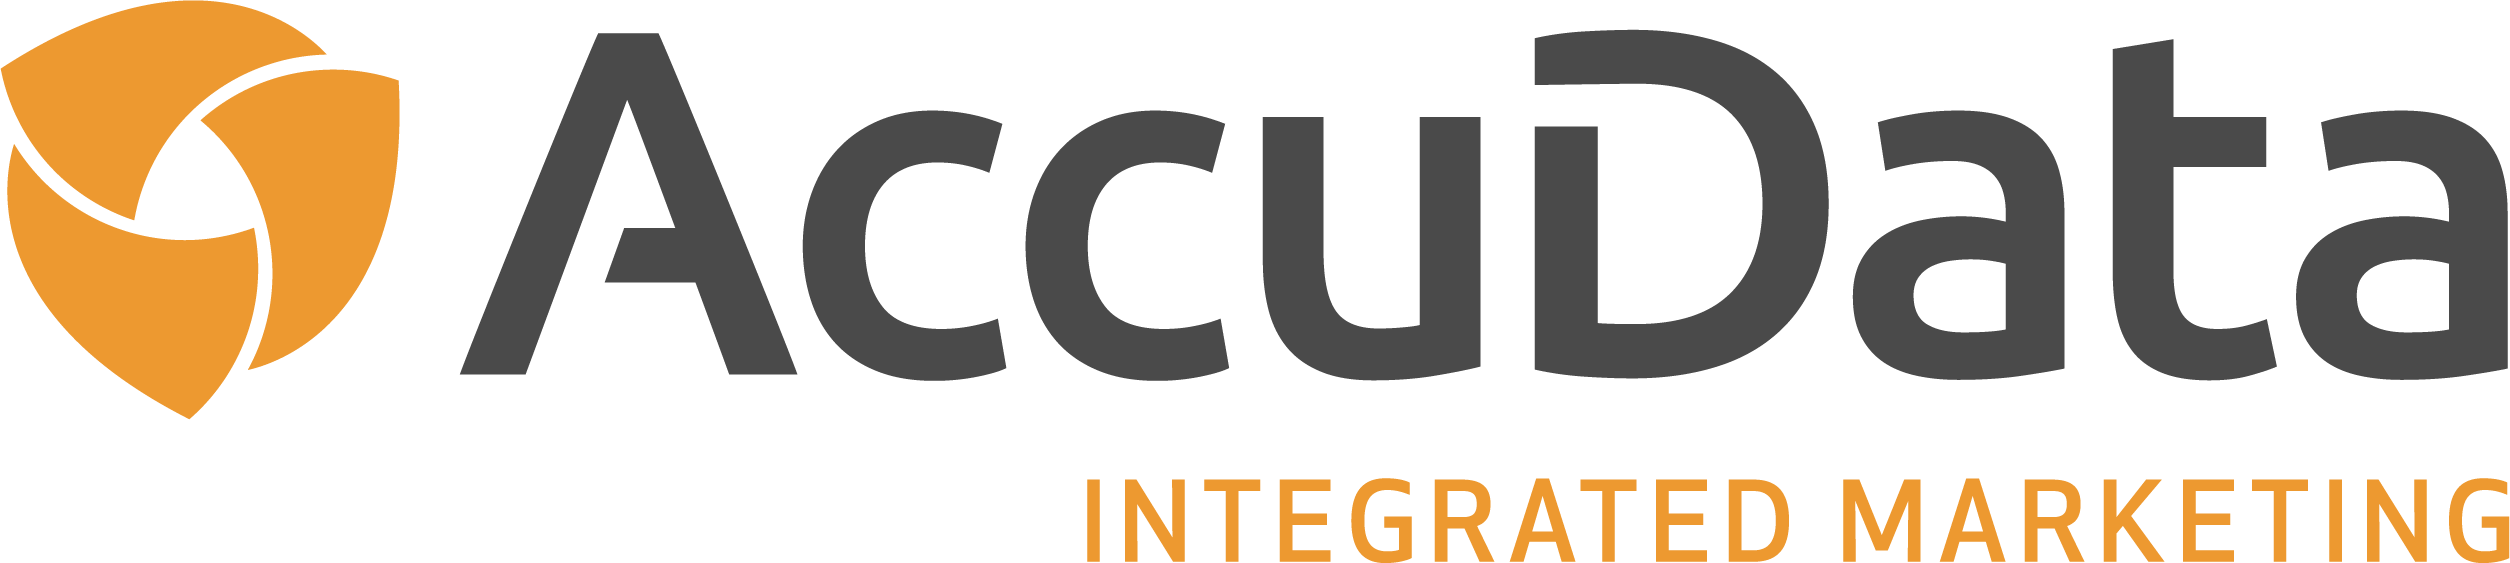 AccuData logo